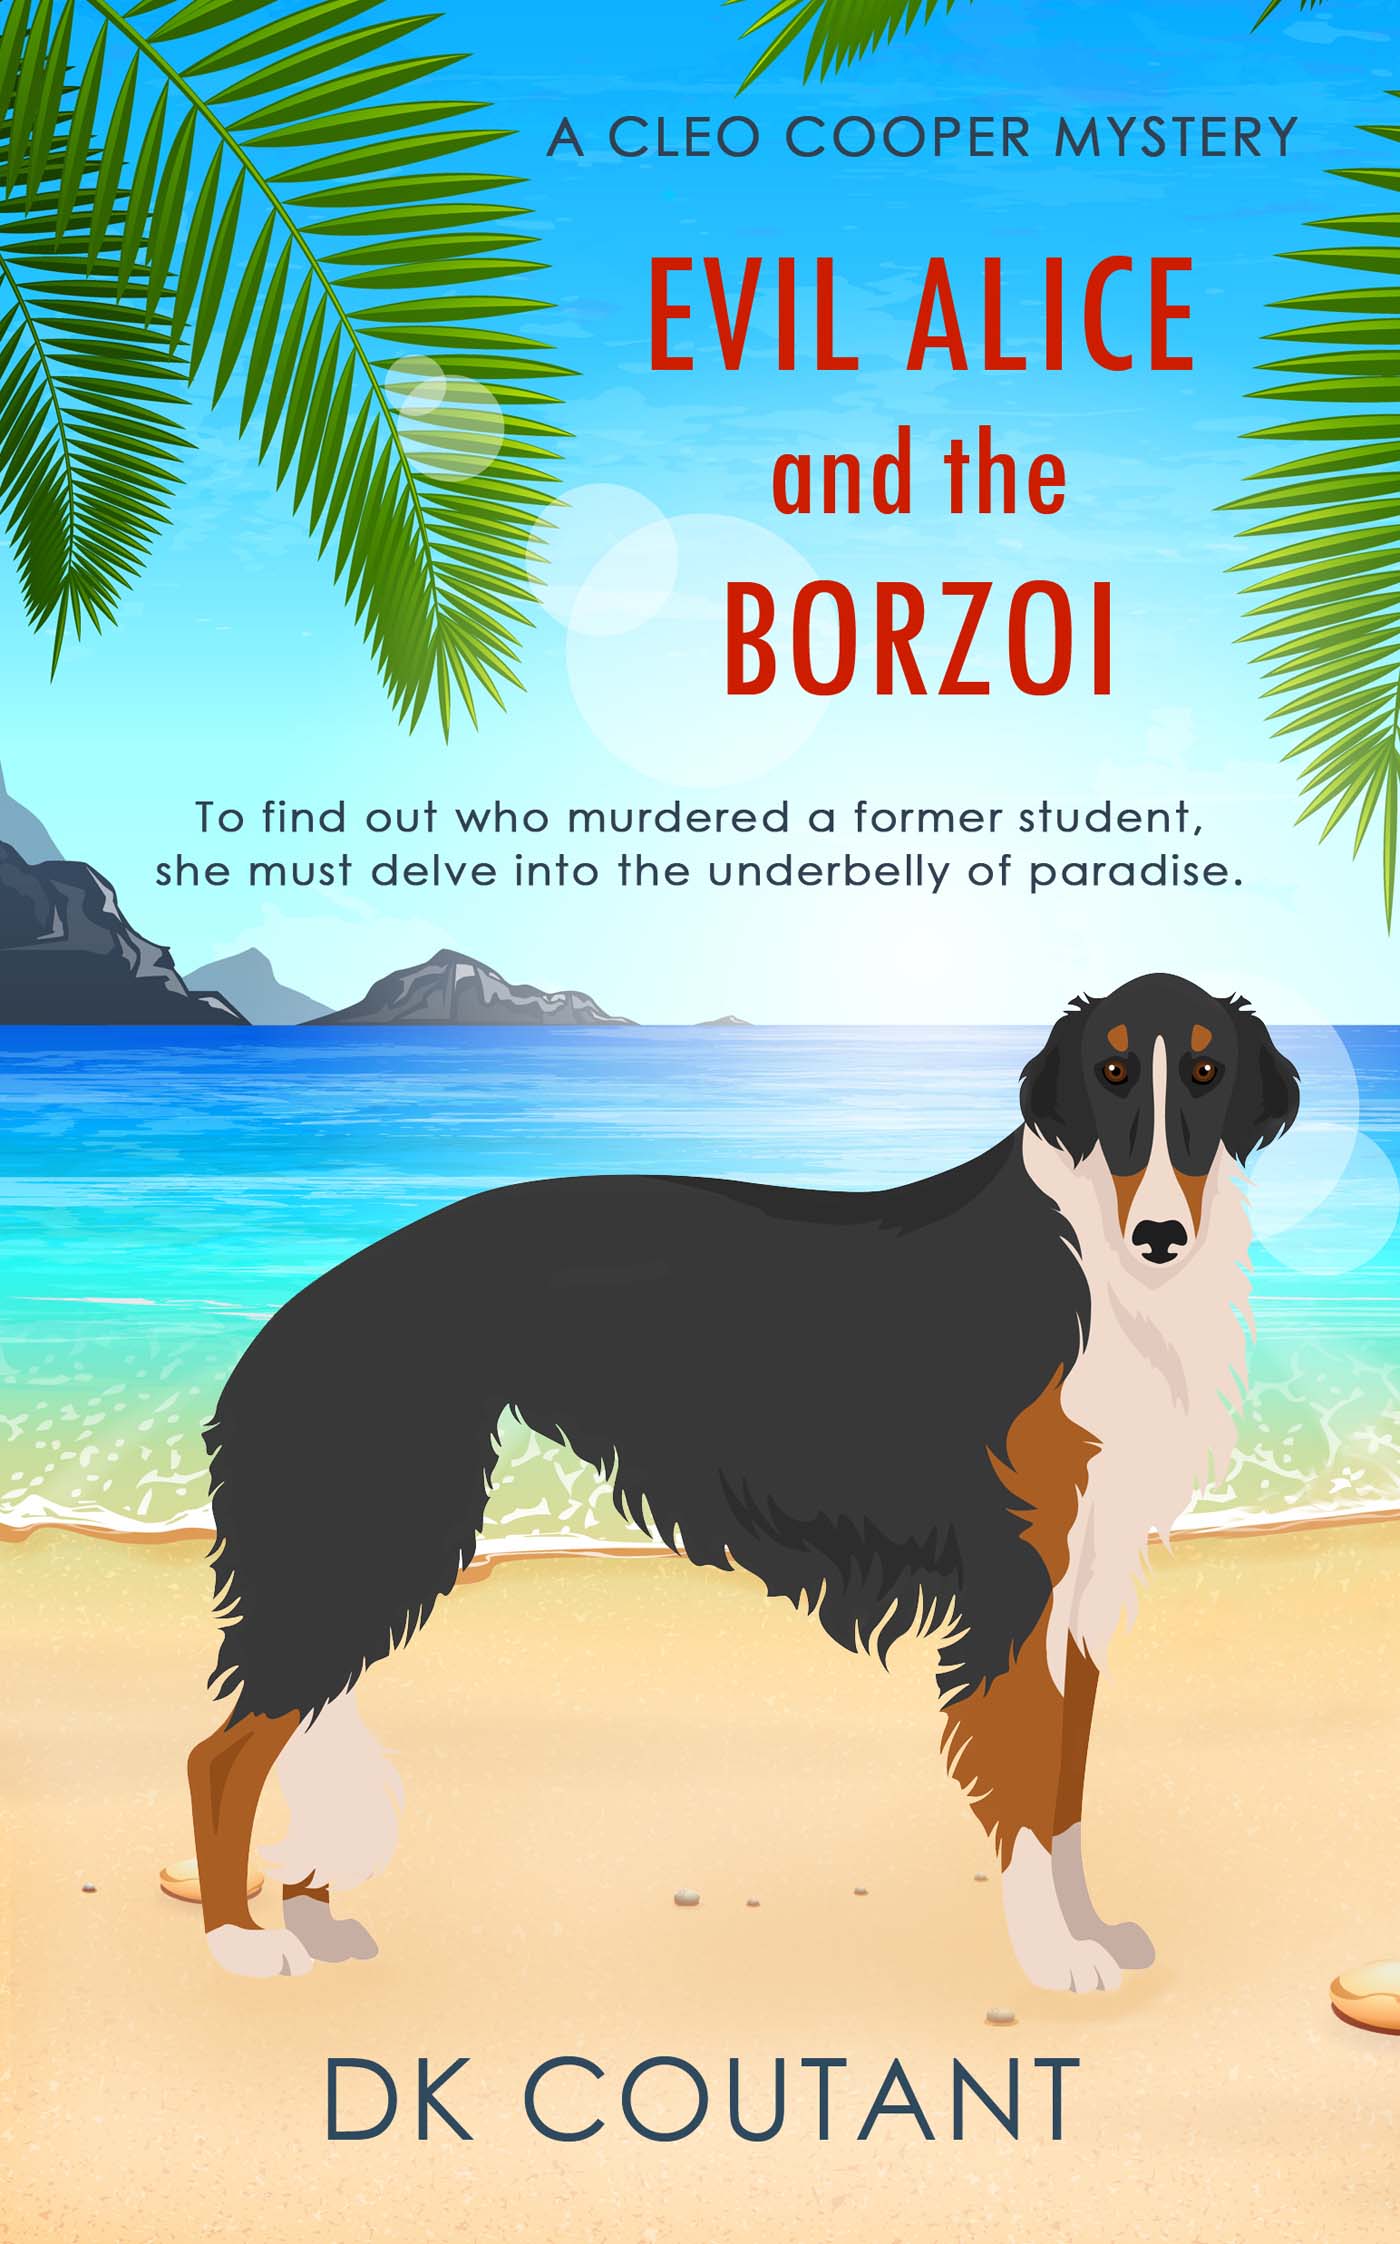 Borzoi dog standing on a Hawaiian beach, staring at the reader